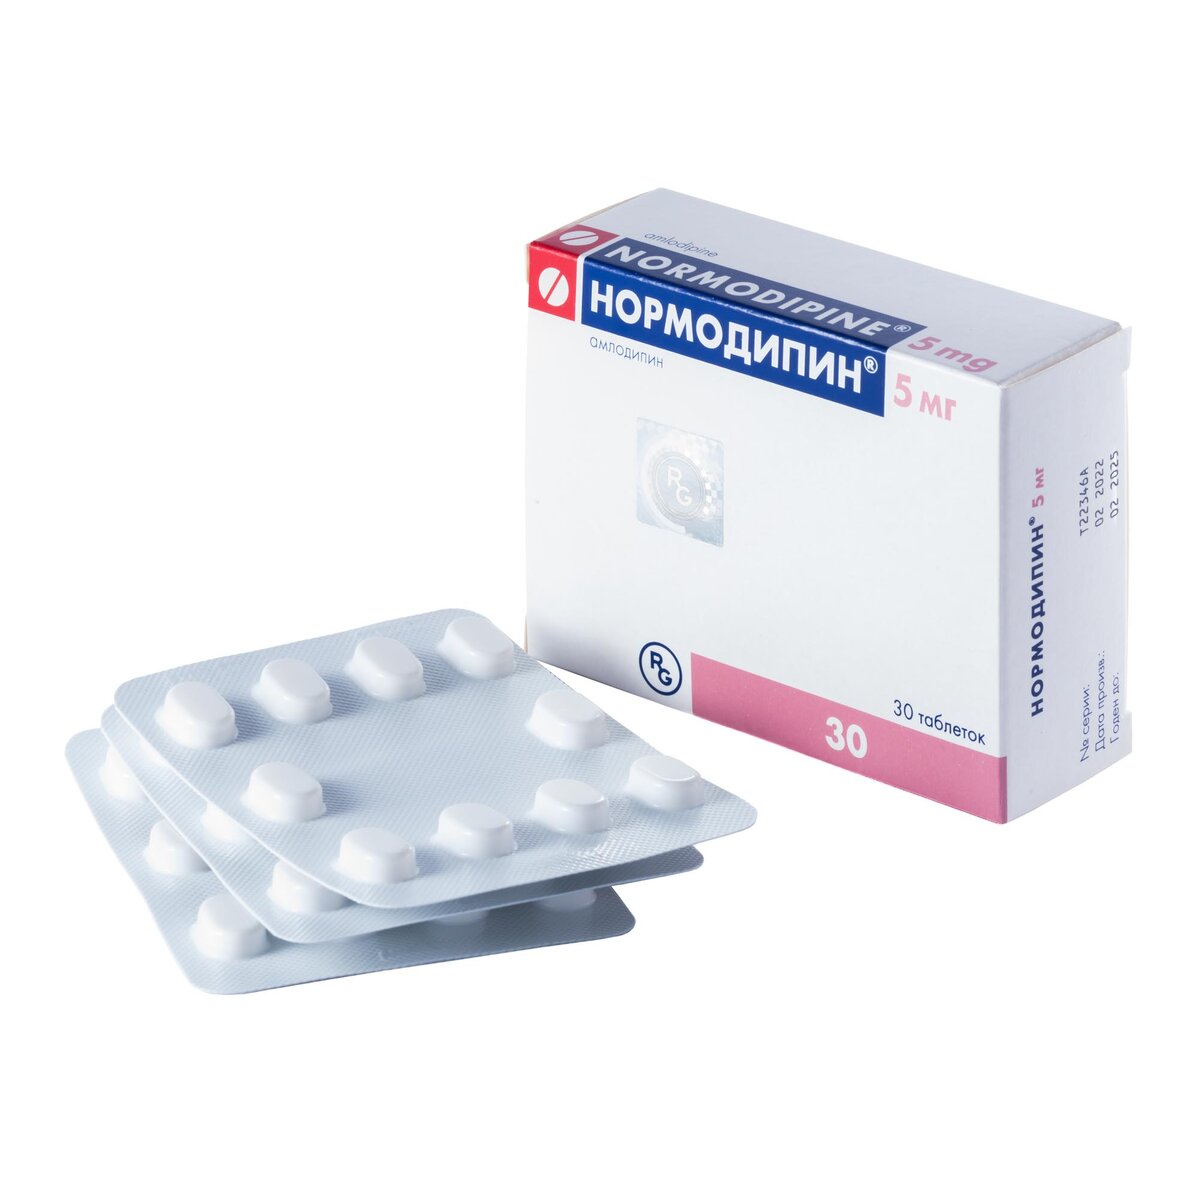 Нормодипин таблетки 5 мг 30 шт.